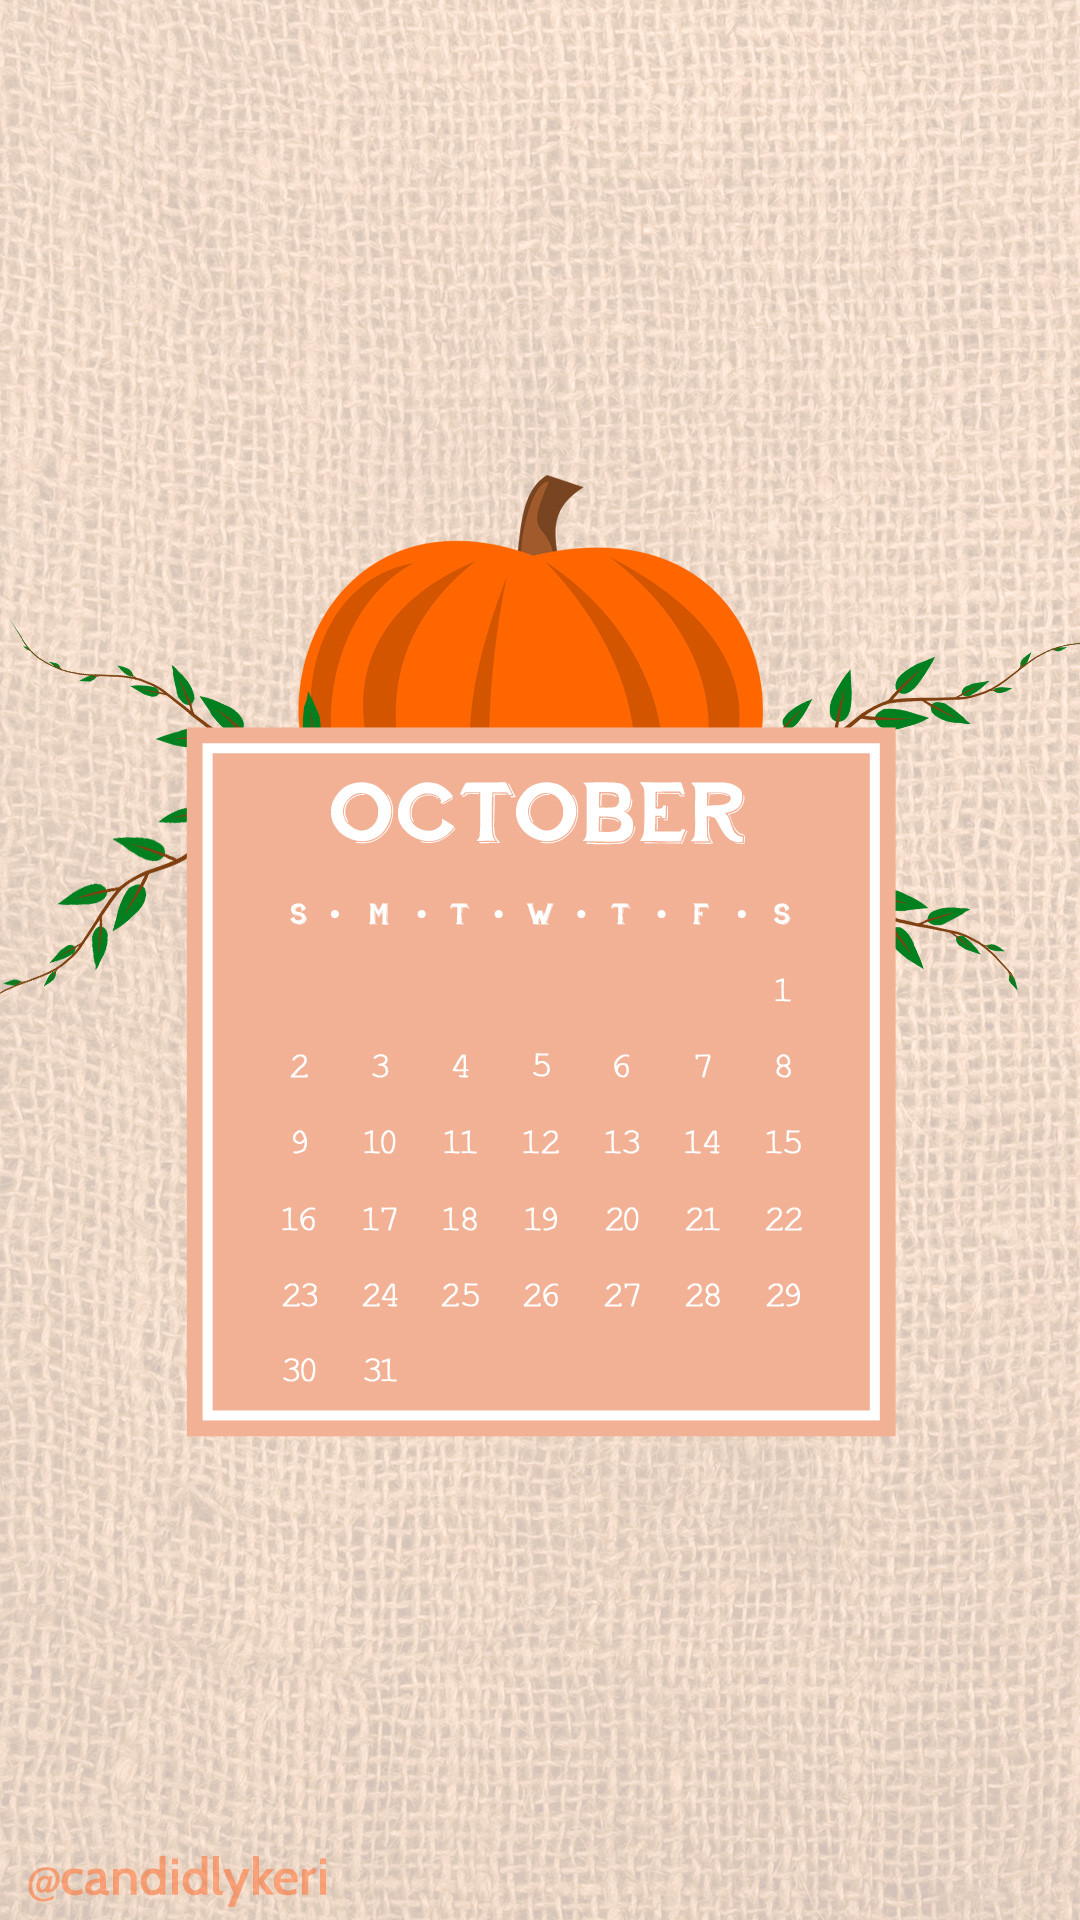 1080x1920 Cute cartoon pumpkin vector burlap sack October calendar 2016 wallpaper you  can download for free on